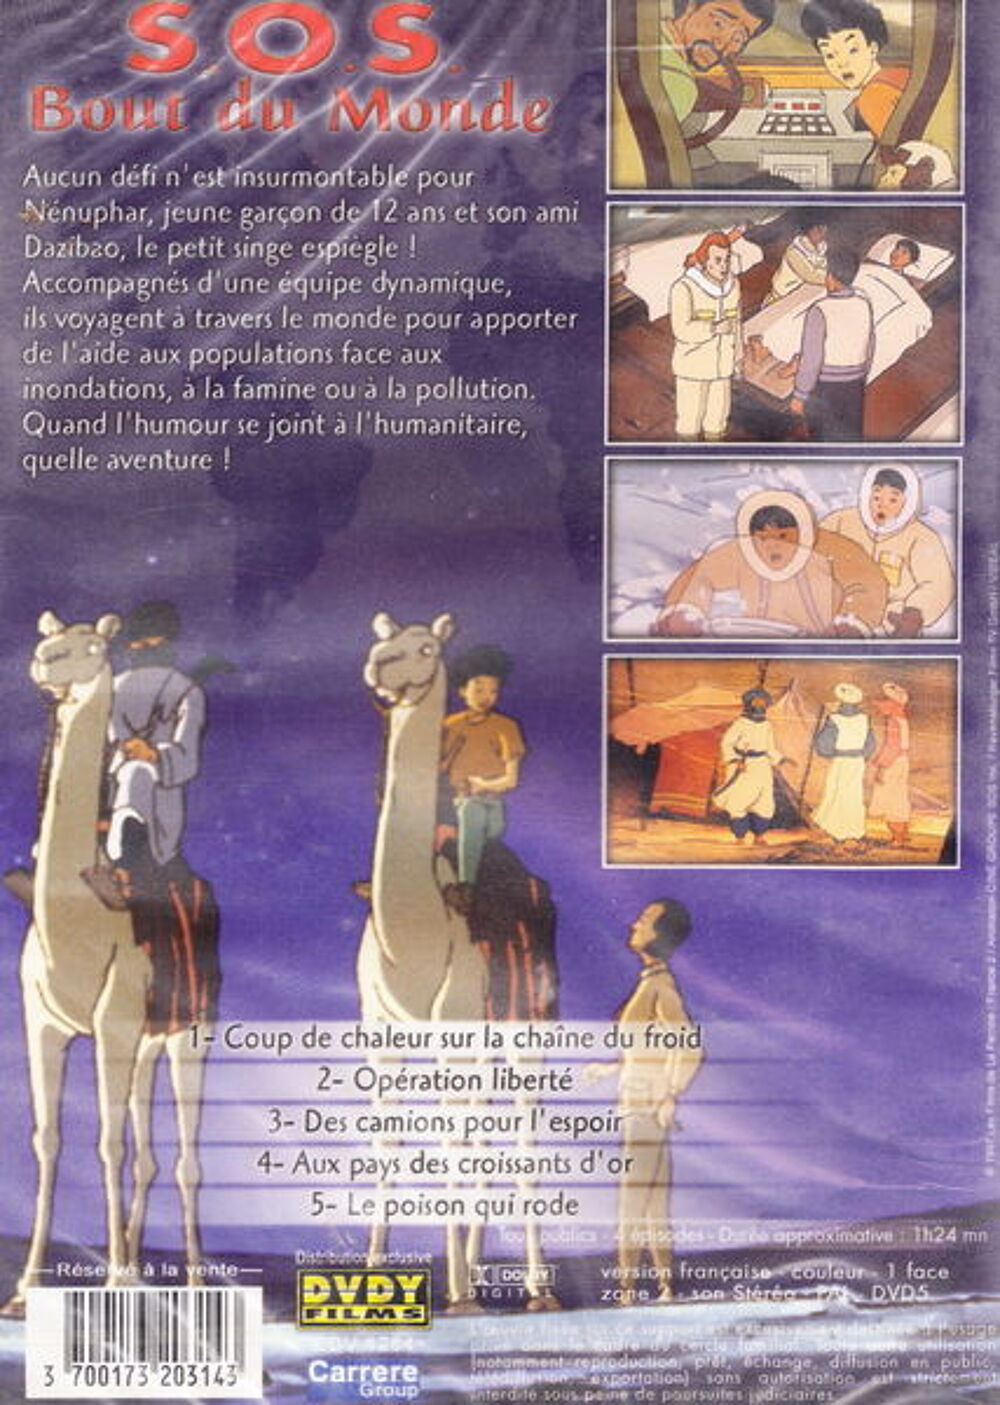 DVD SOS Bout du monde NEUF sous blister
DVD et blu-ray